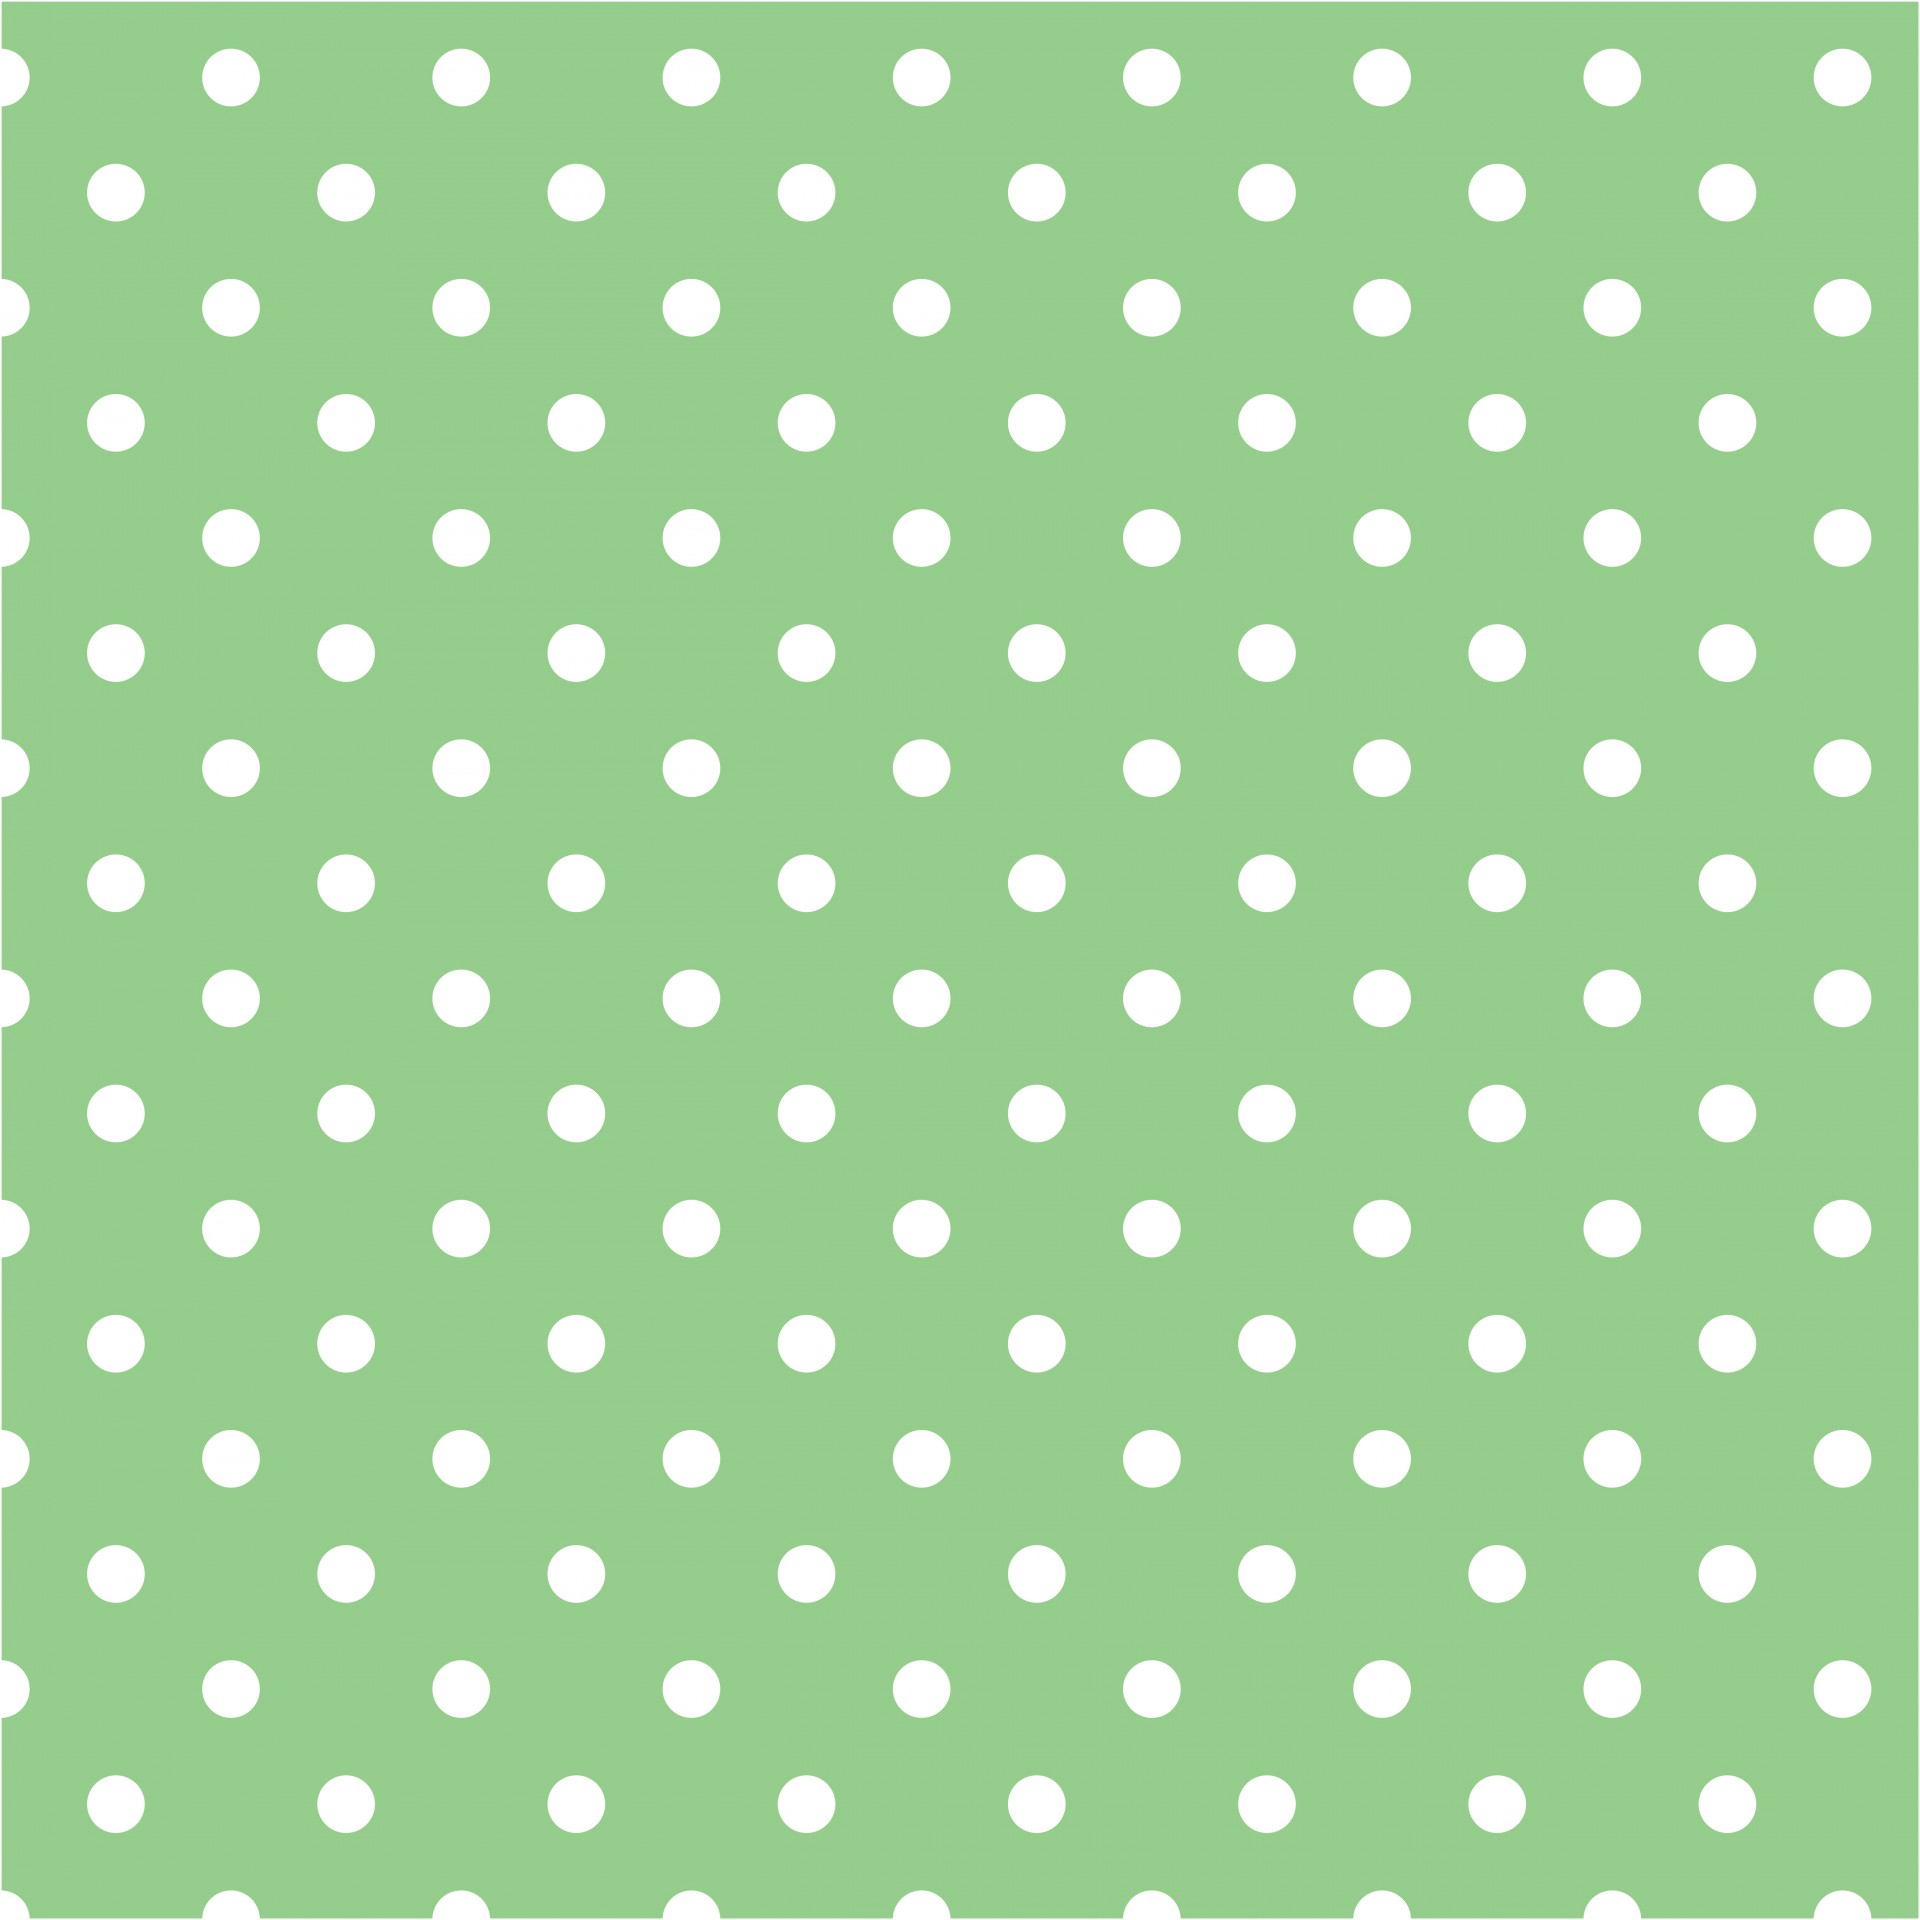 polka dots green white free photo